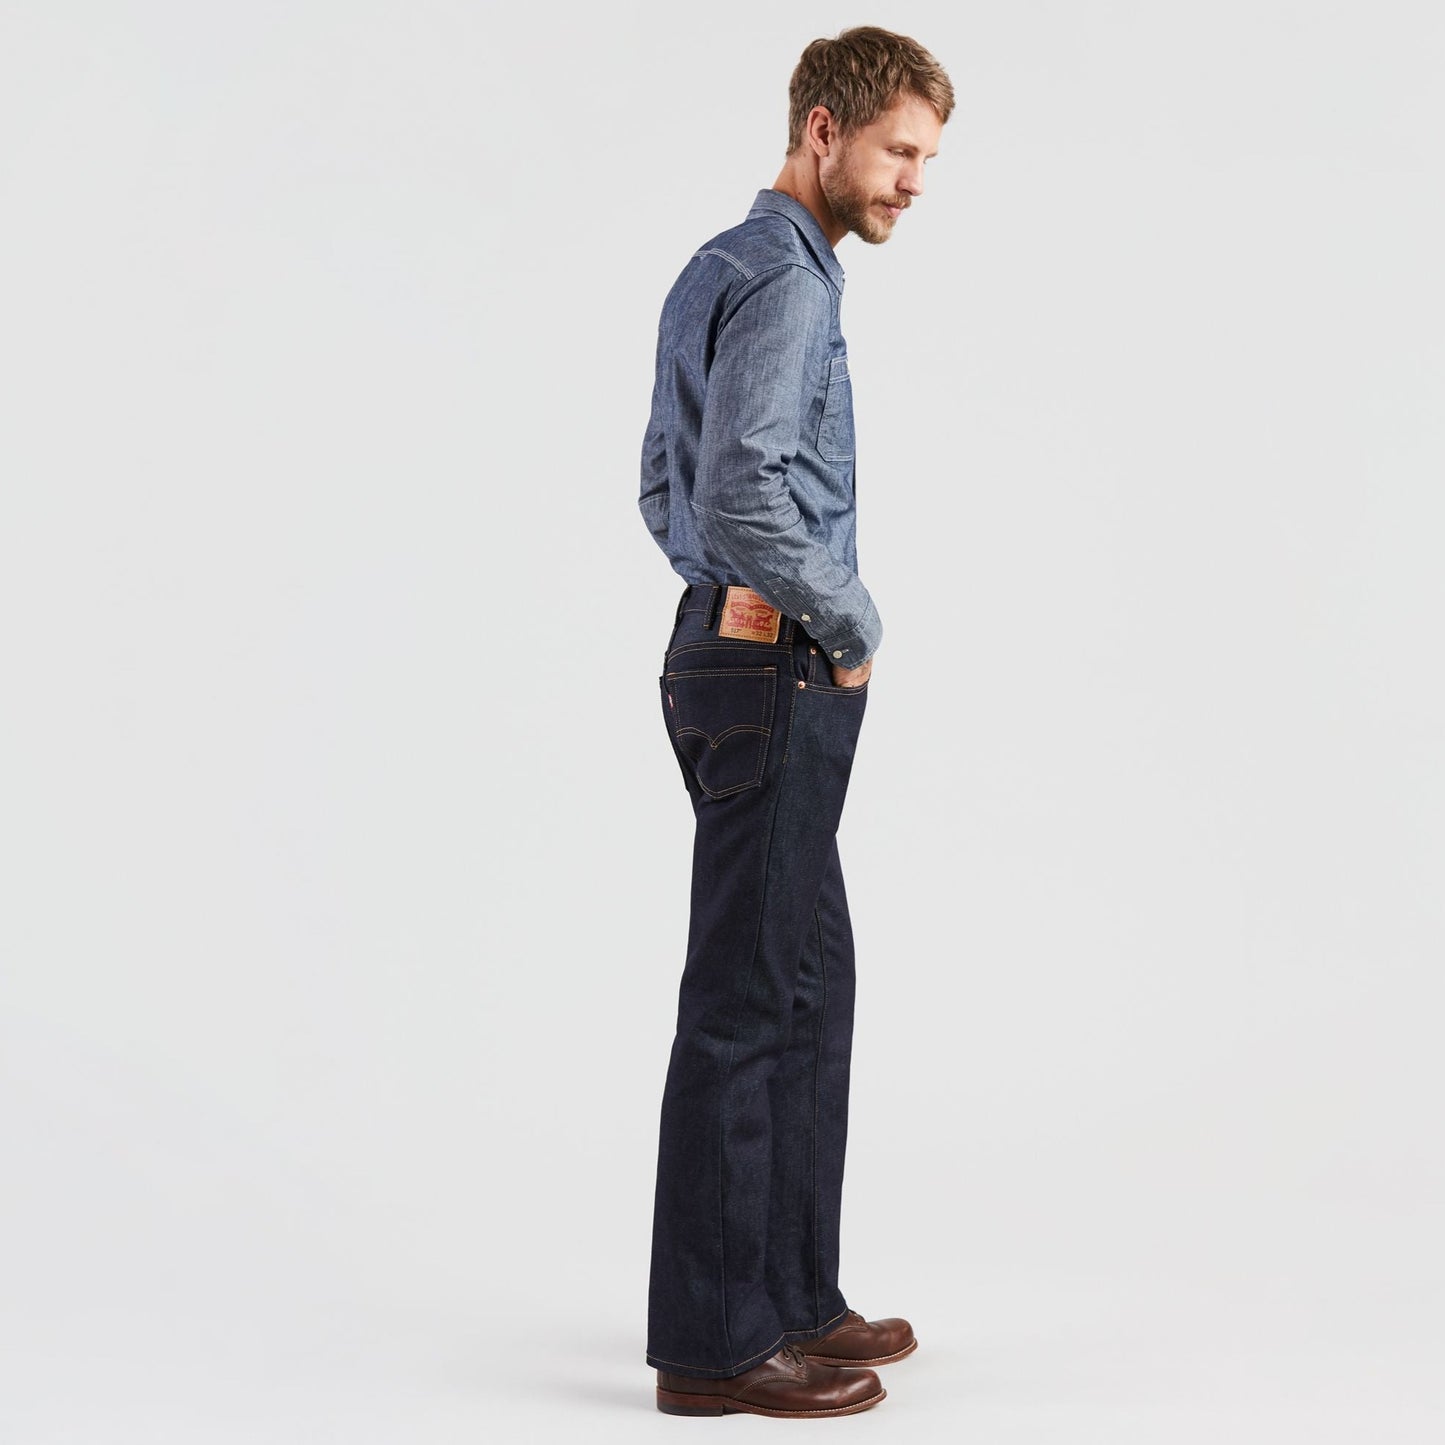 Levi's® Men's 517 Rigid Boot Cut Denim Jeans - 517